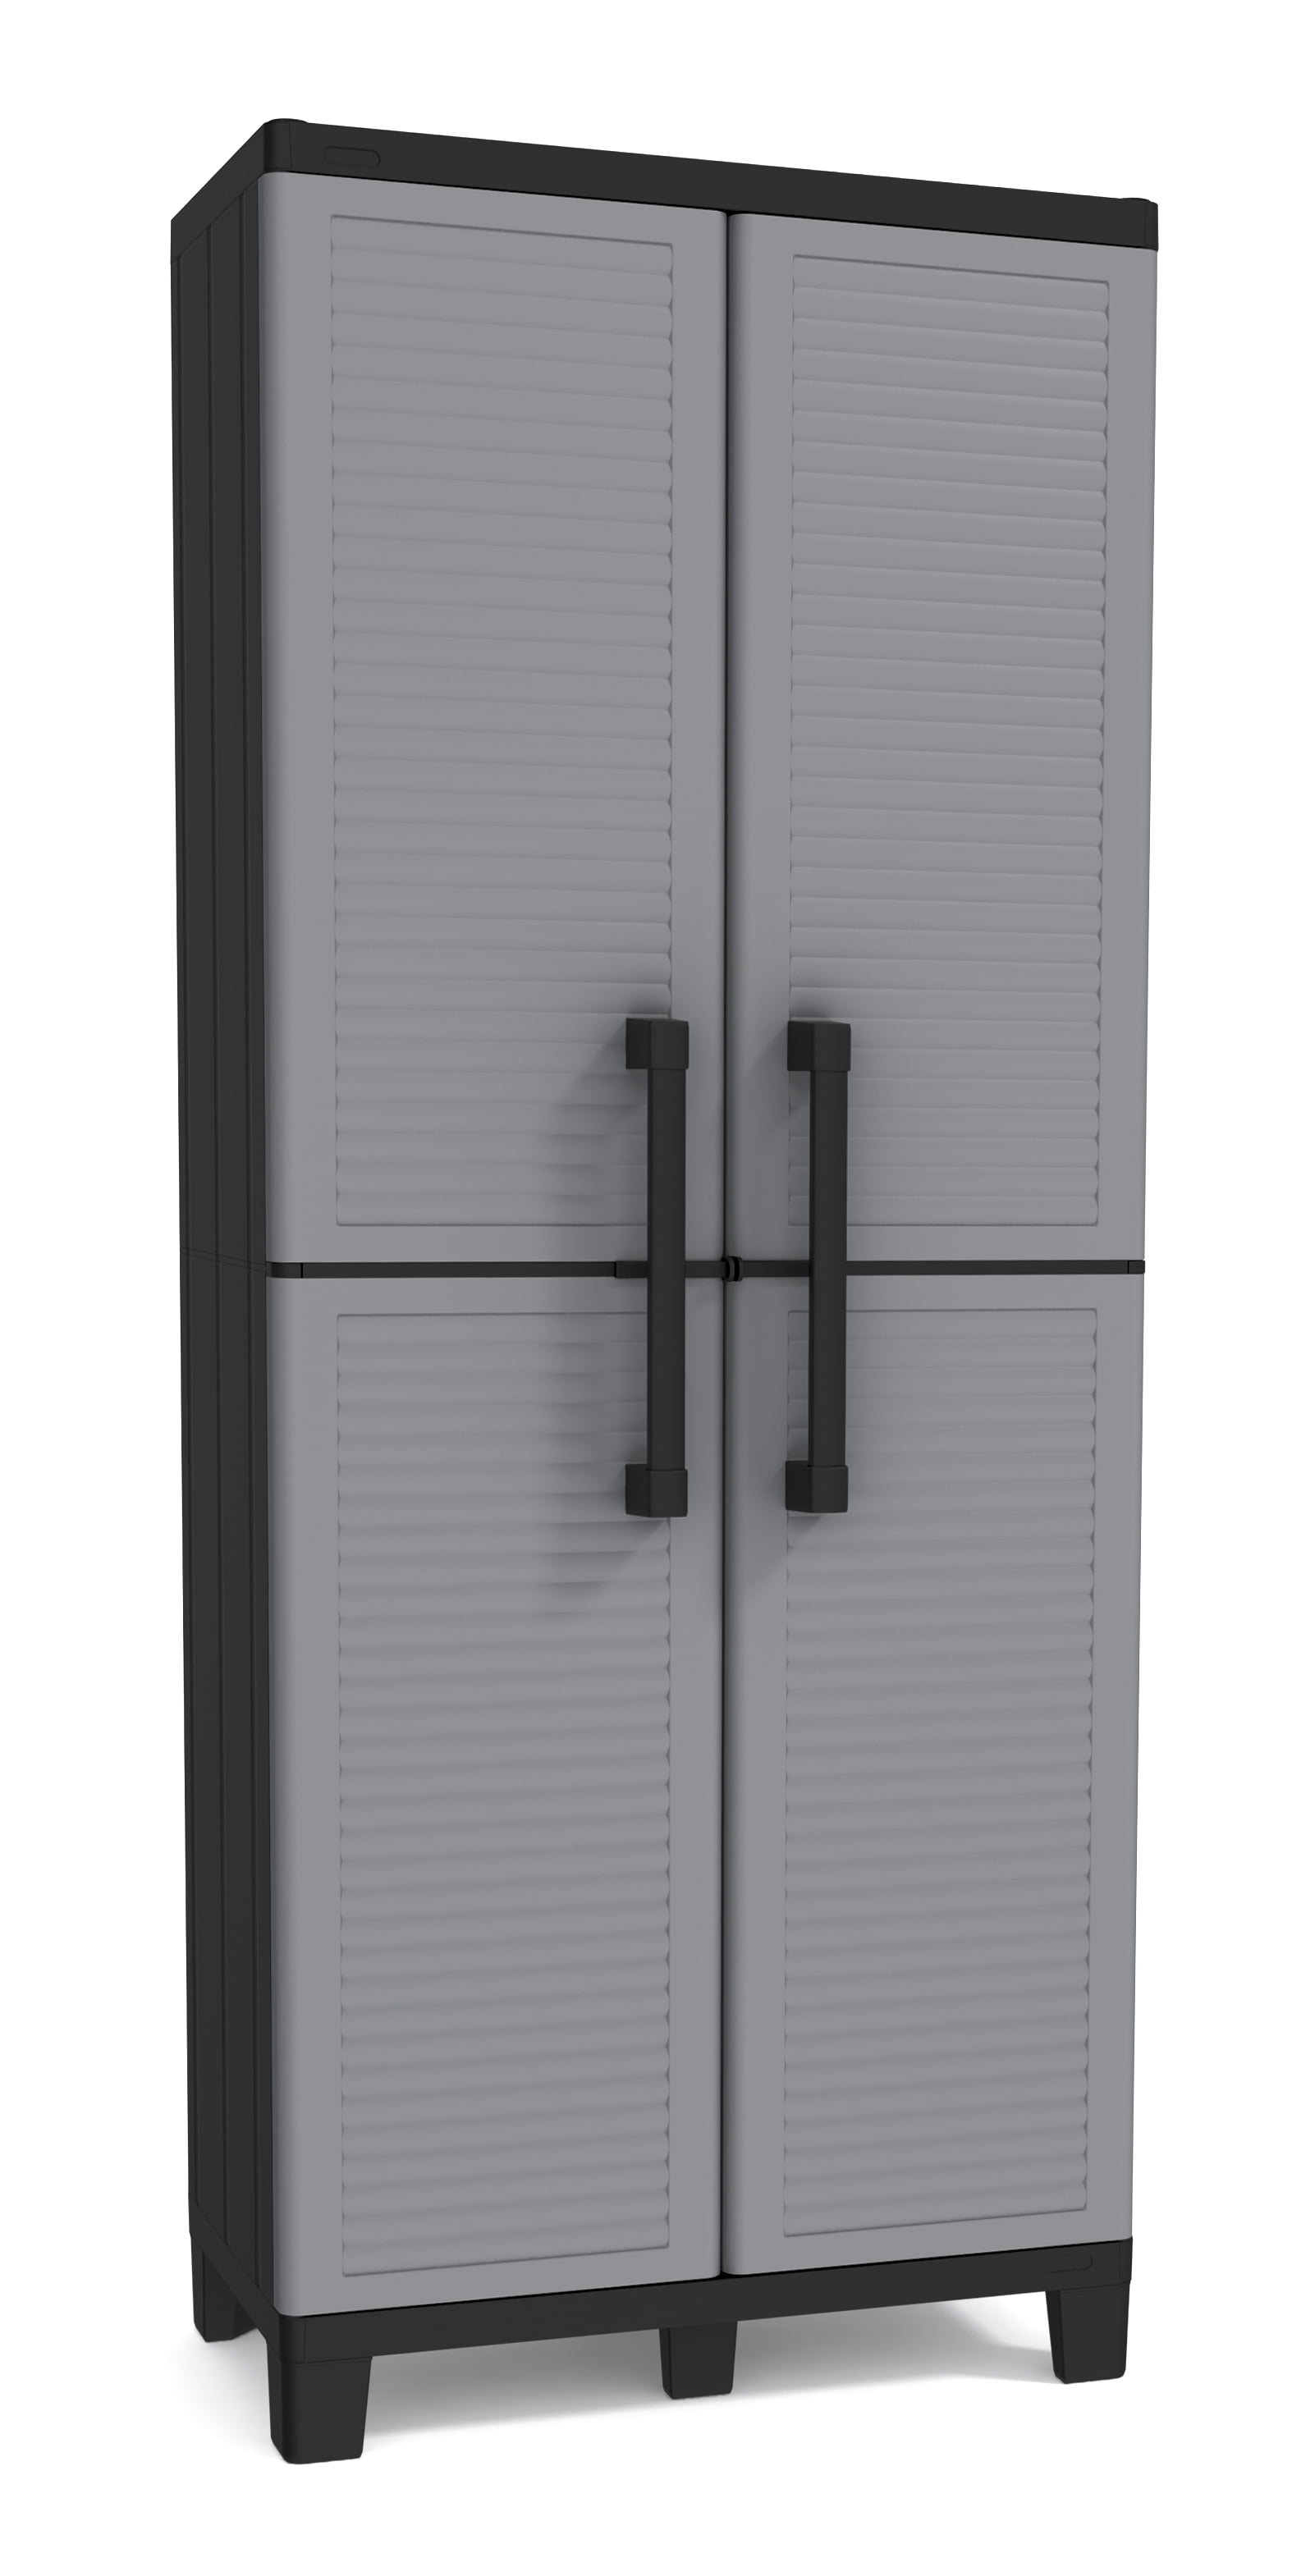 Keter 227138 Space Winner Adjustable Garage Storage Gray Resin Utility Cabinet for sale online 